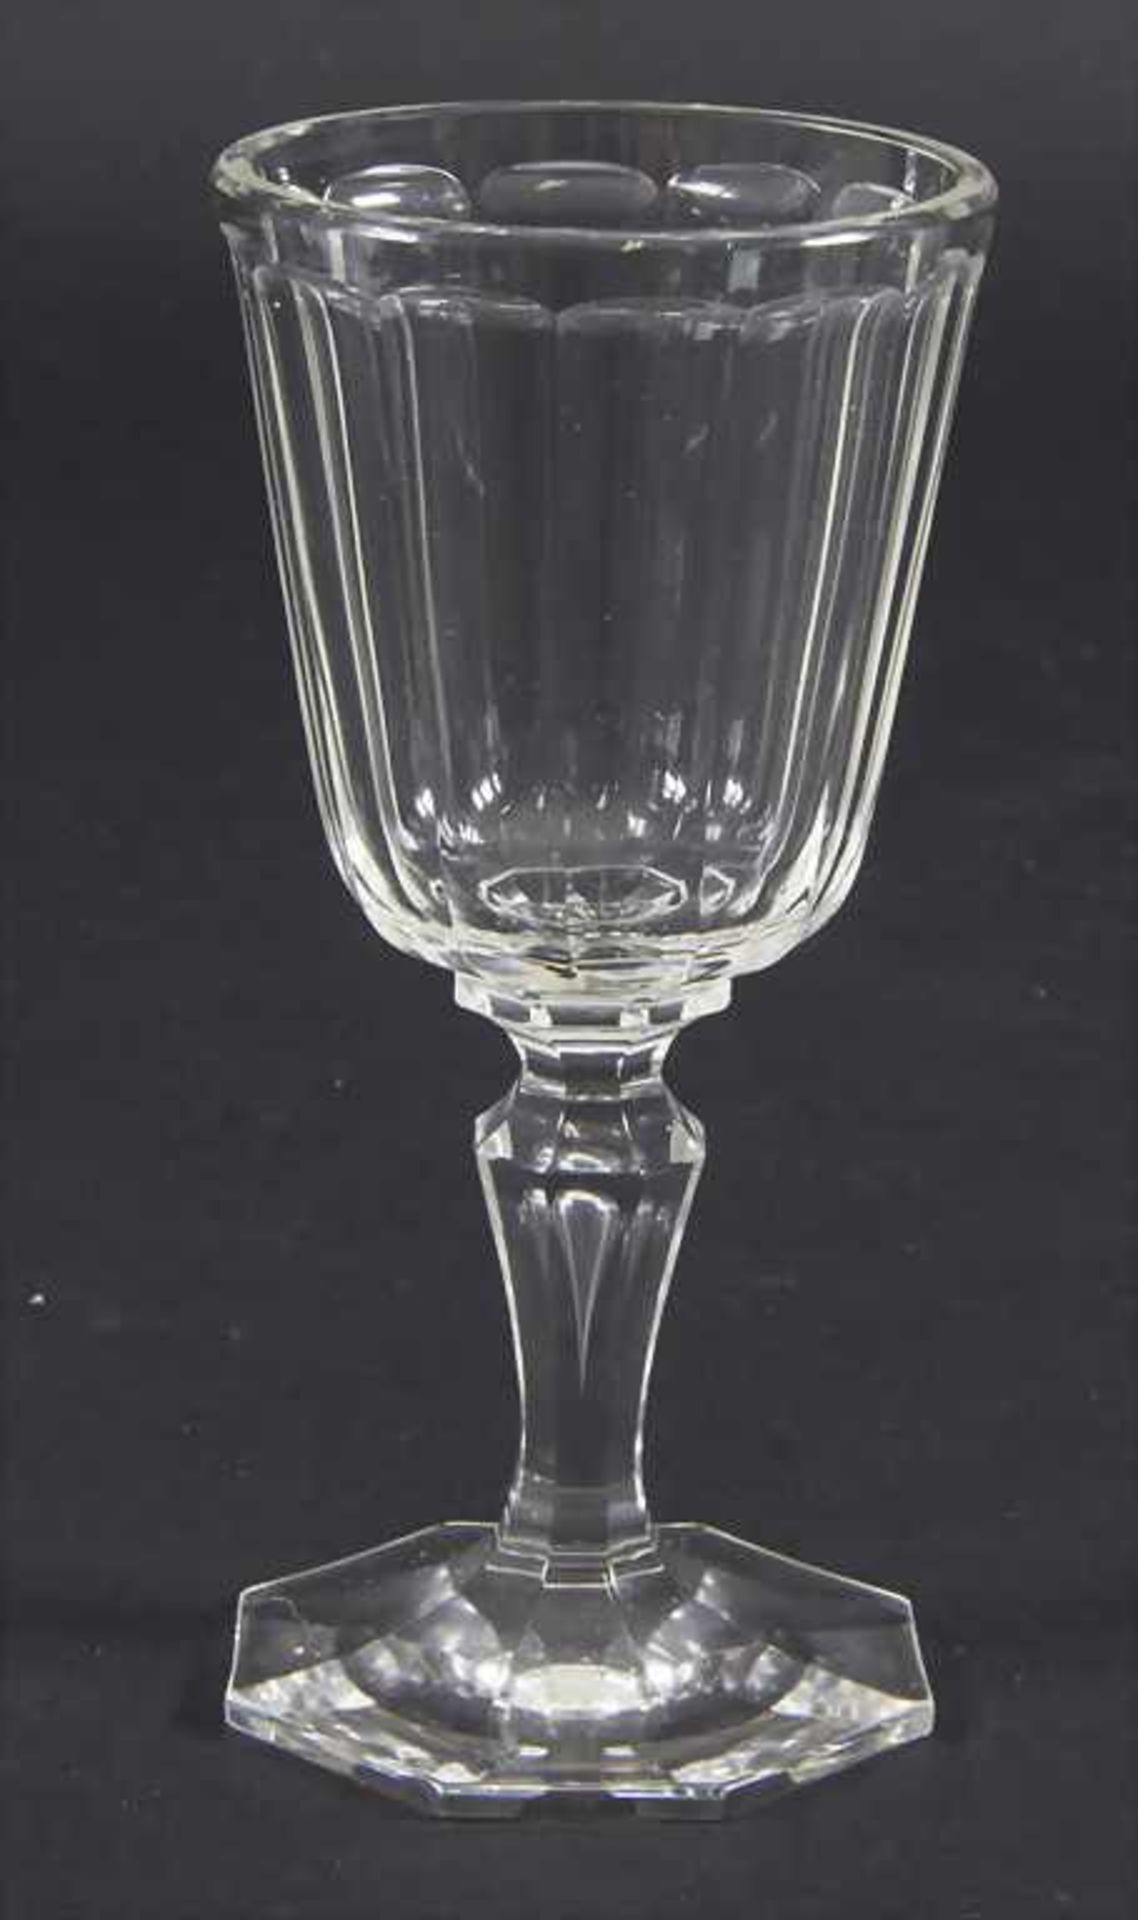 Weißweinglasr / A white wine glass, J. & L. Lobmeyr, Wien, um 1900 - Image 2 of 4